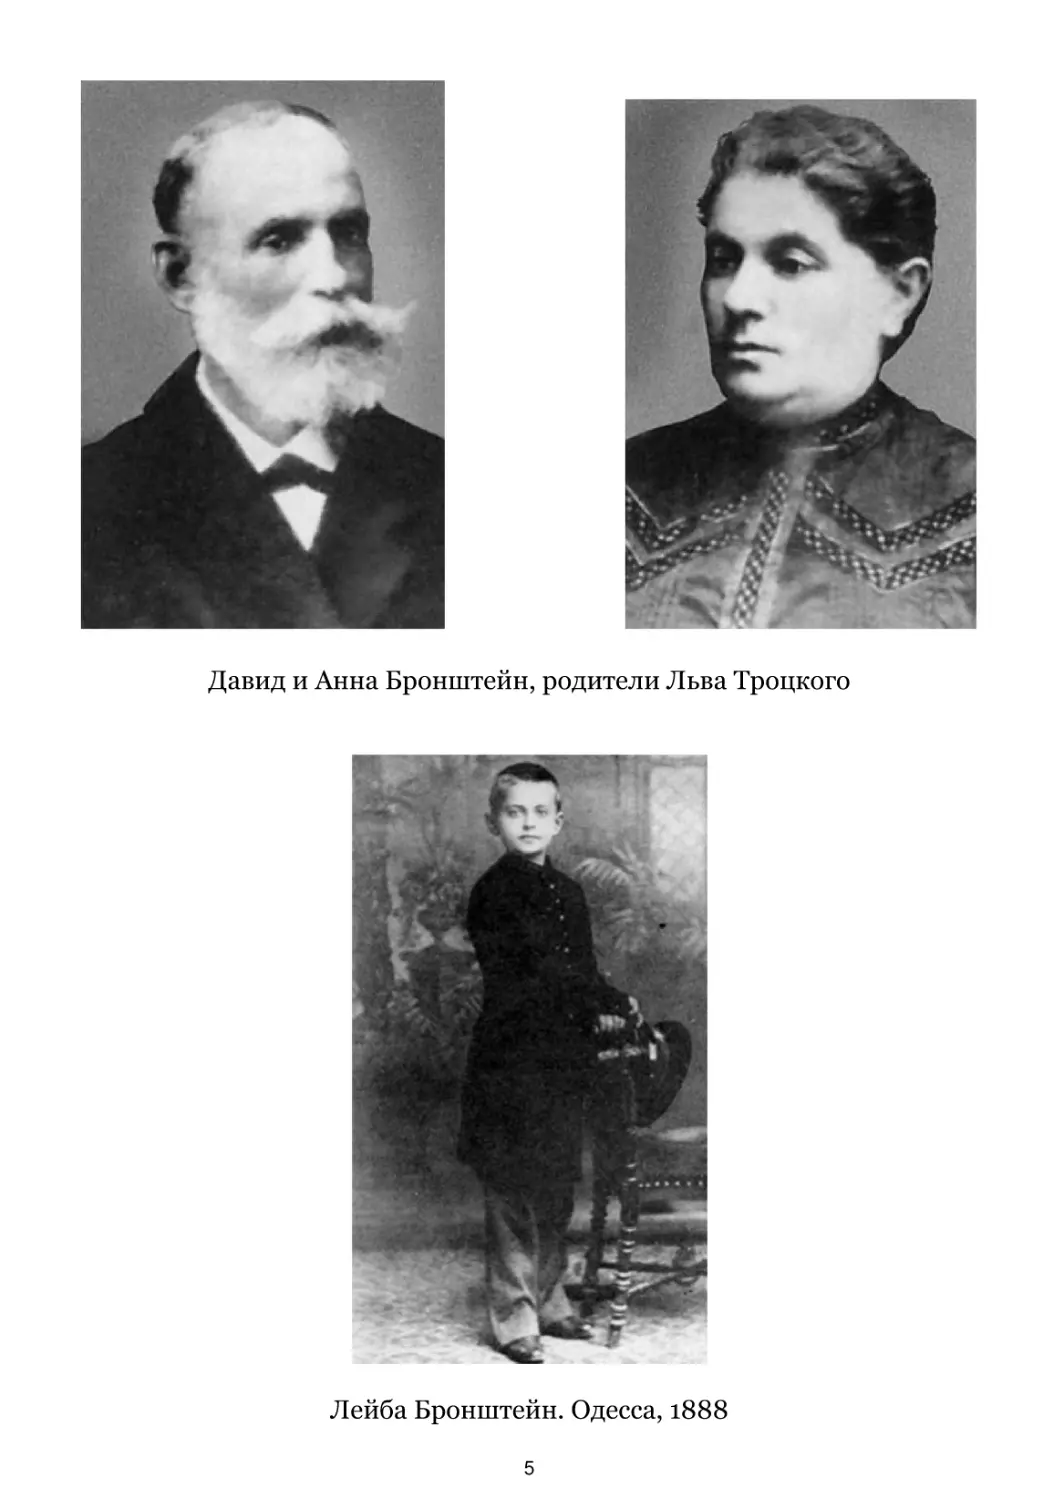 Давид и Анна Бронштейн, родители Льва Троцкого
Лейба Бронштейн. Одесса, 1888